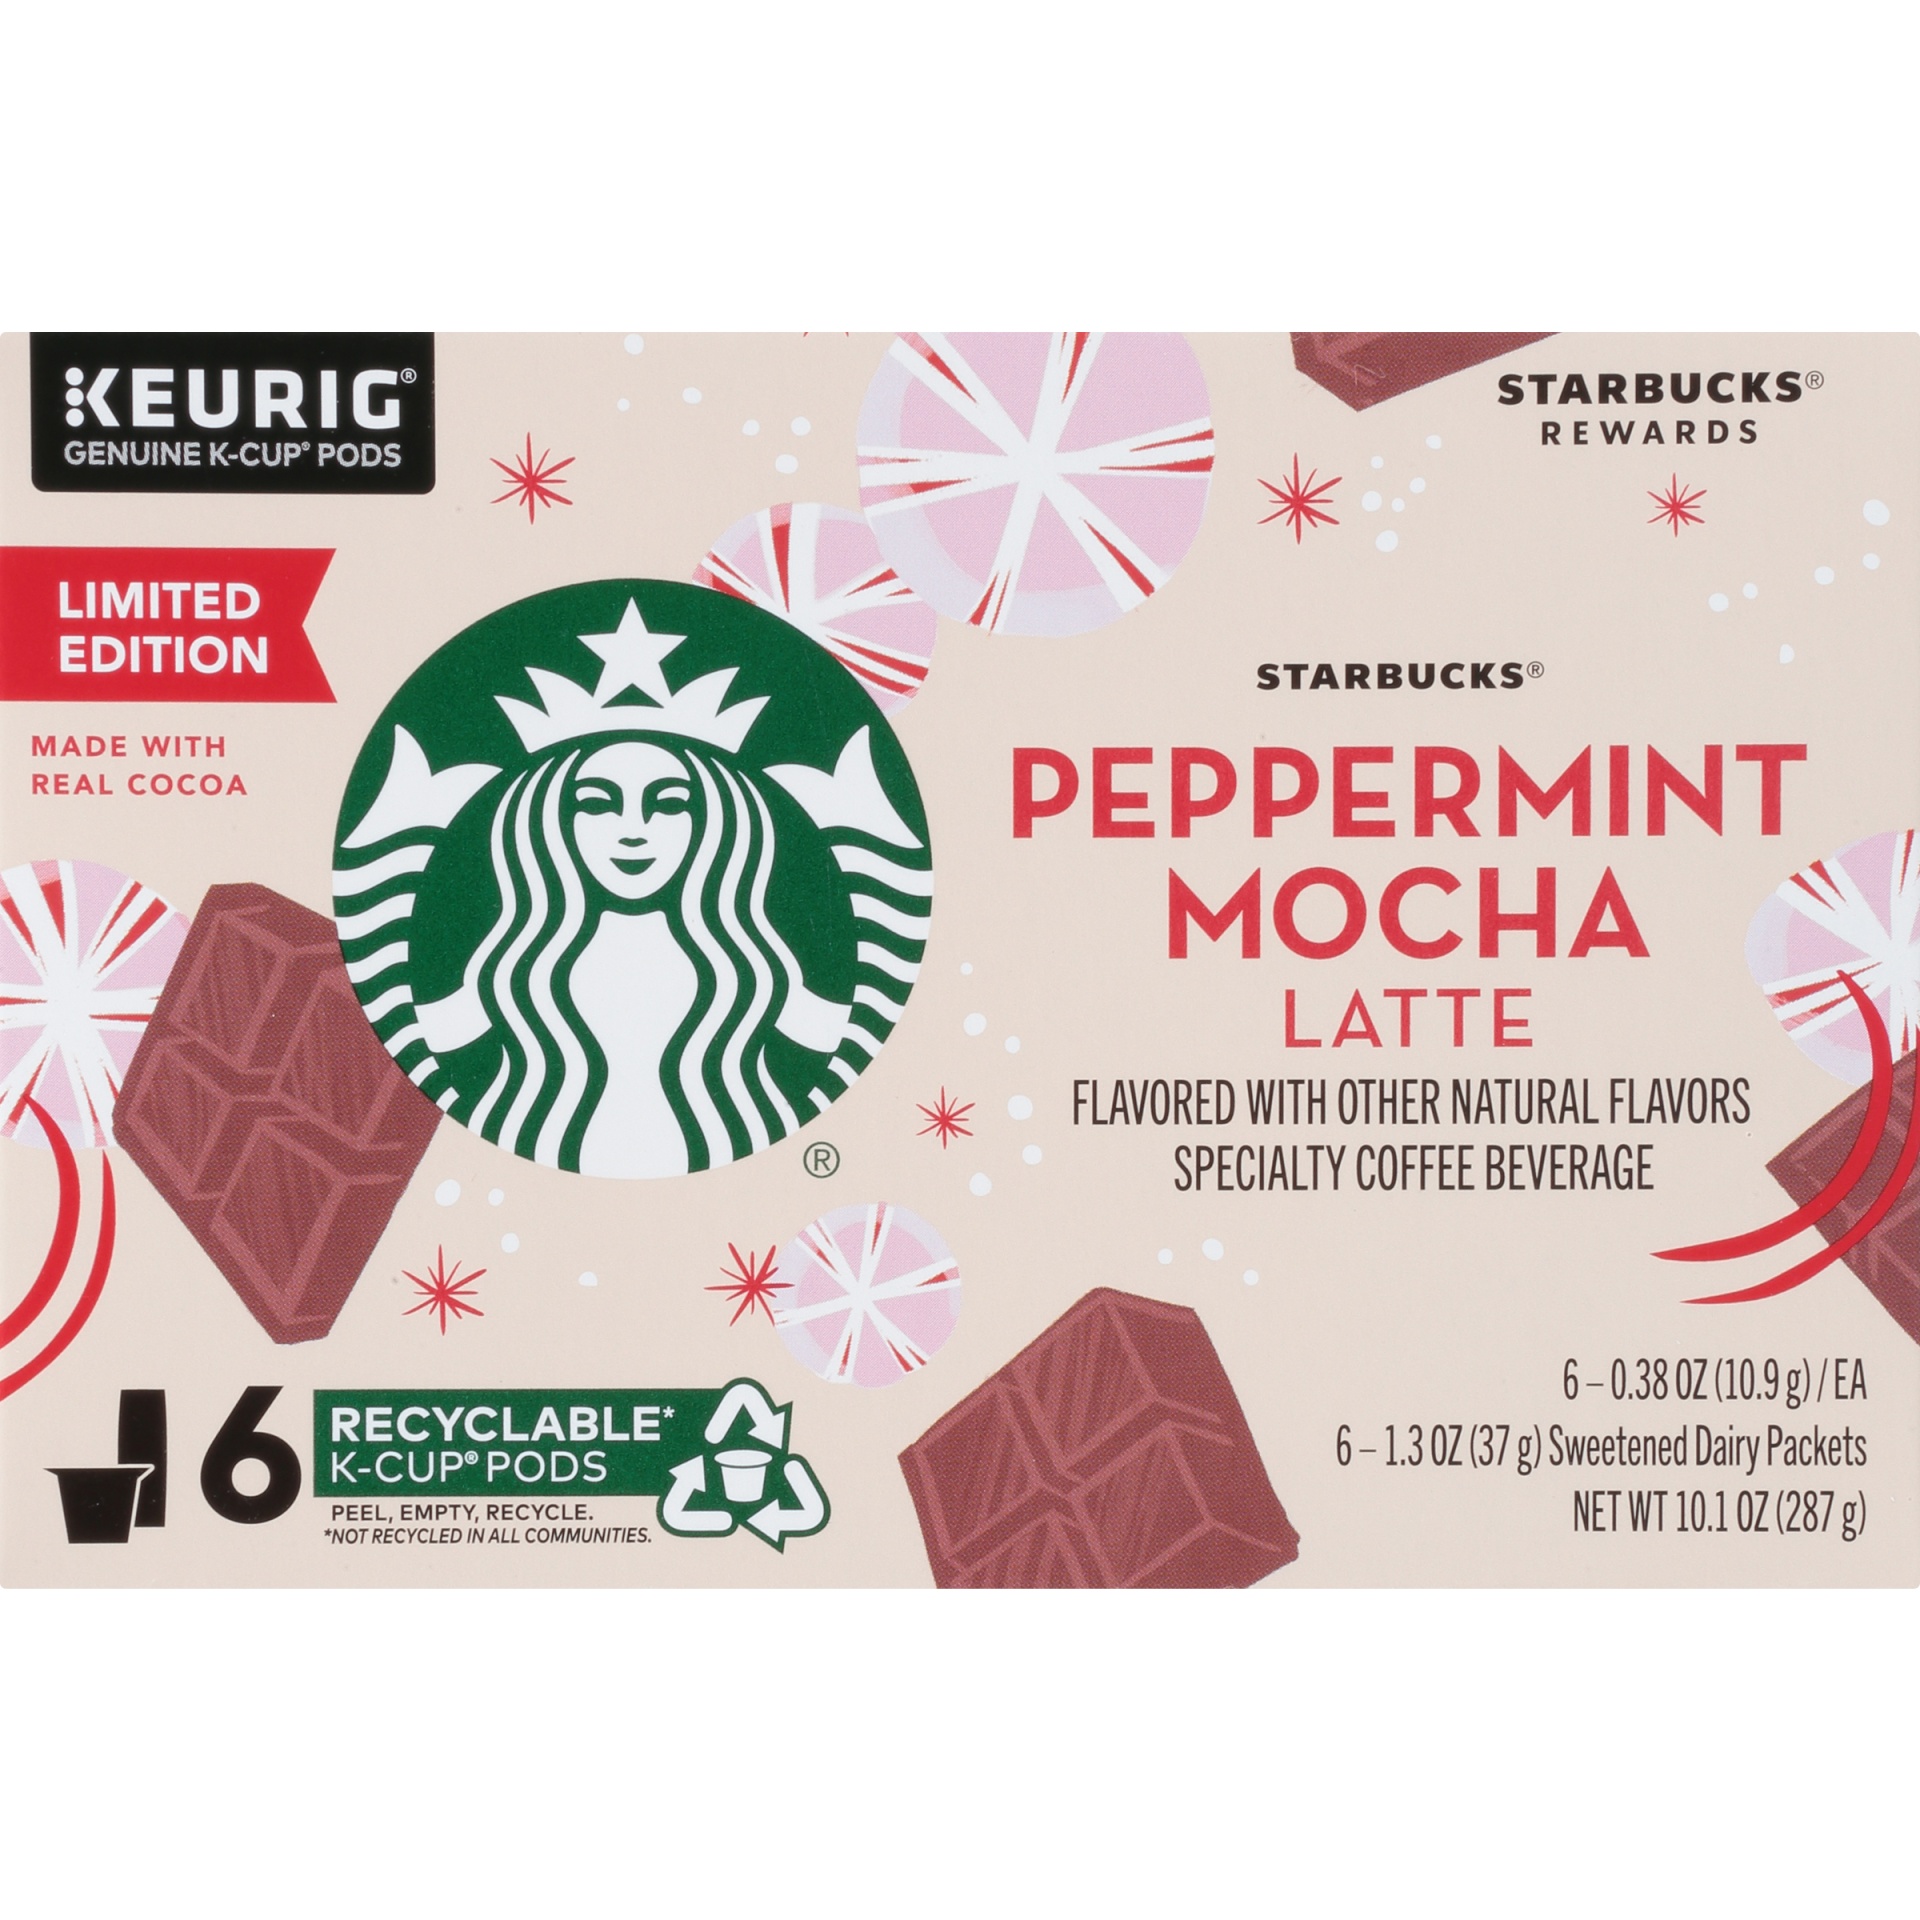 does starbucks peppermint mocha have caffeine